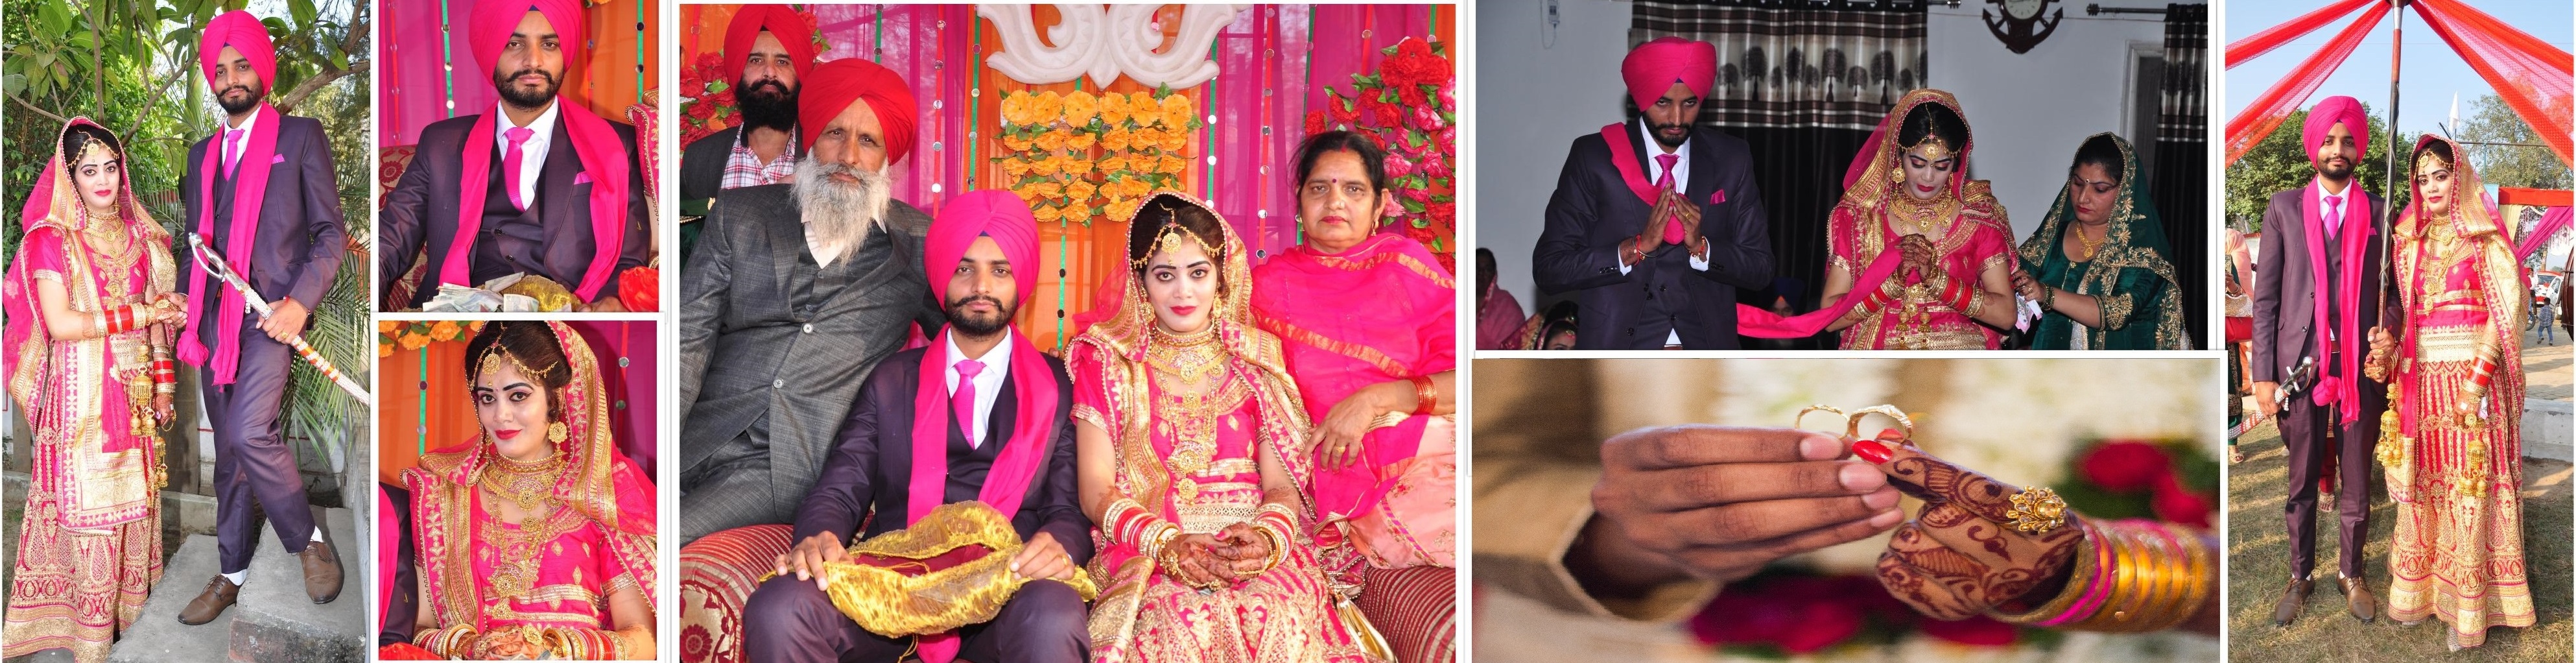 manjinder marriage image, wedding image college